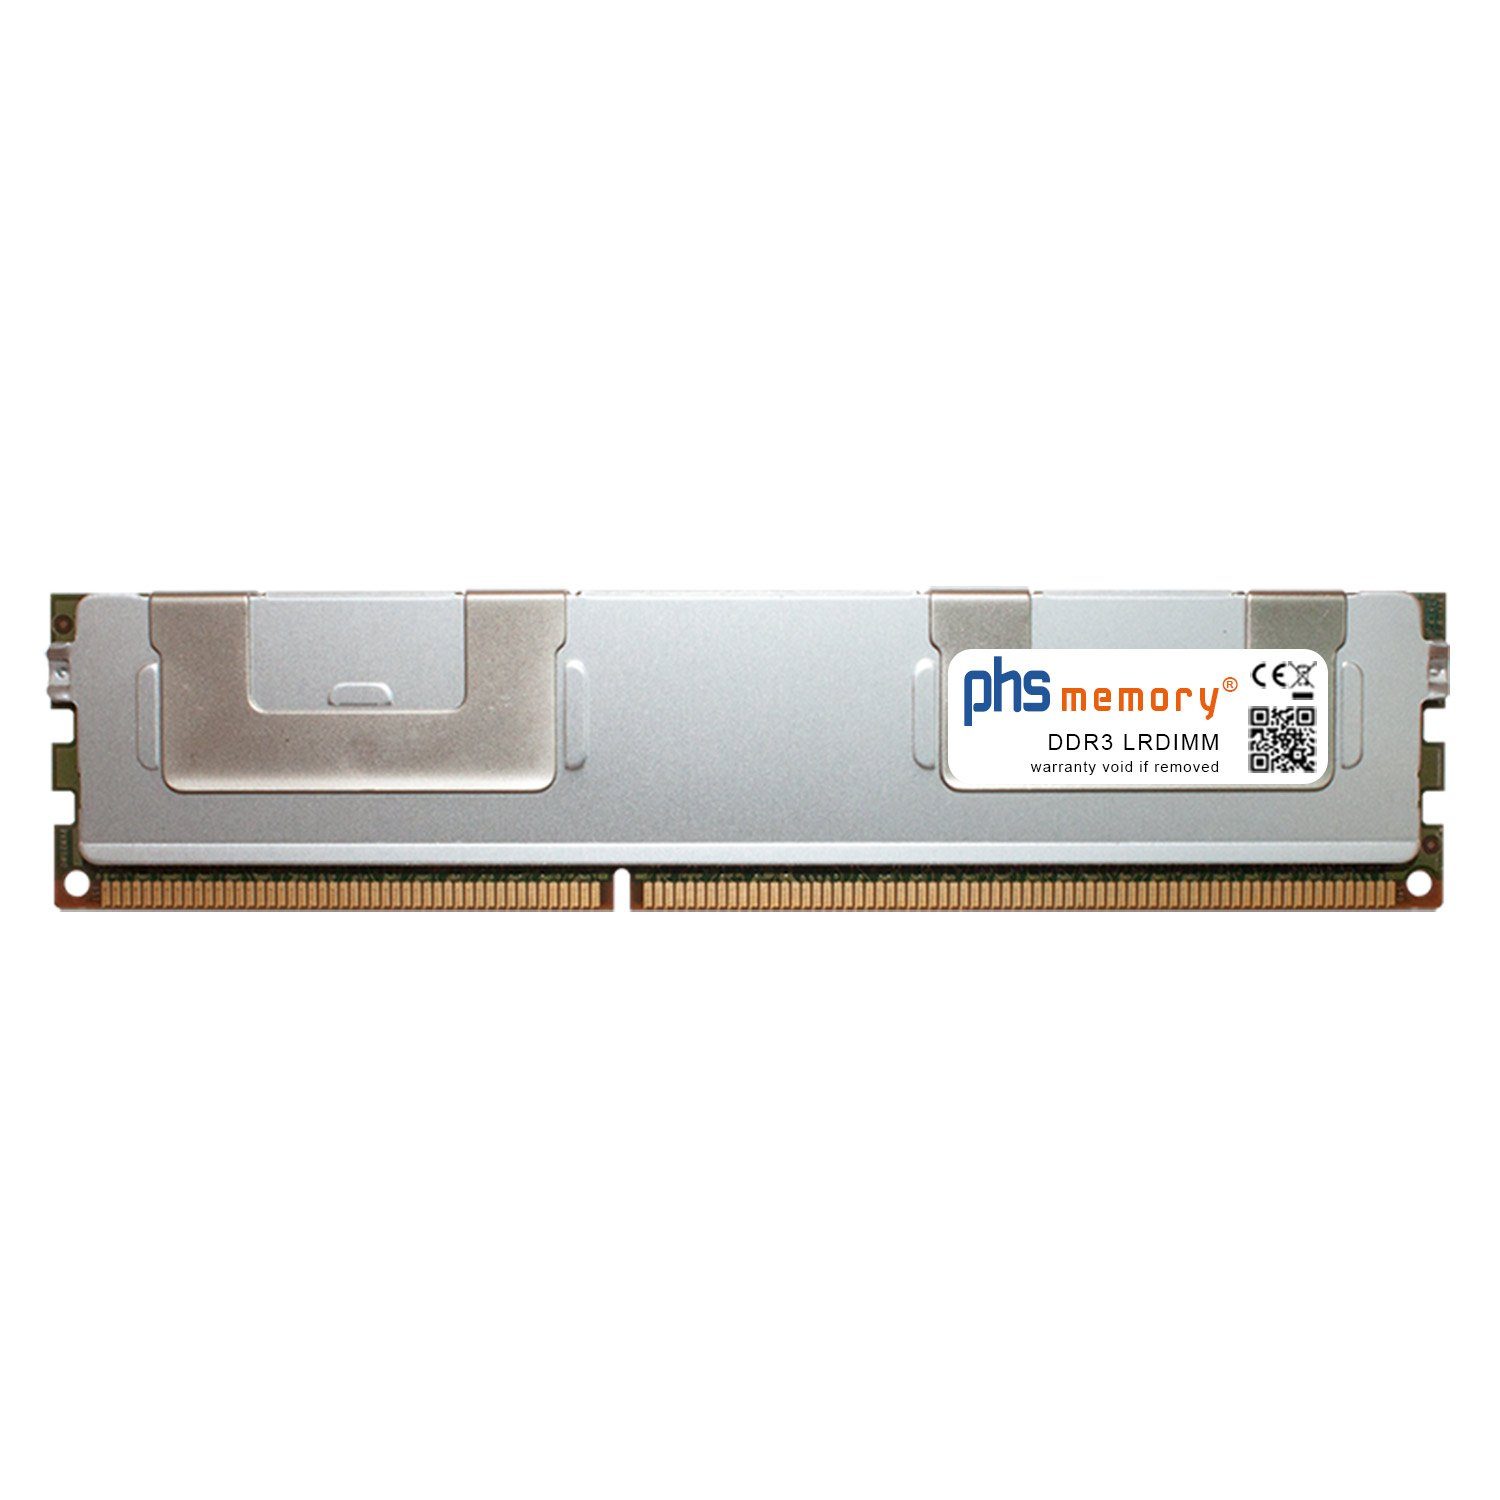 PHS-memory RAM für Supermicro A+ Server 2022TG-H6IBQRF Arbeitsspeicher